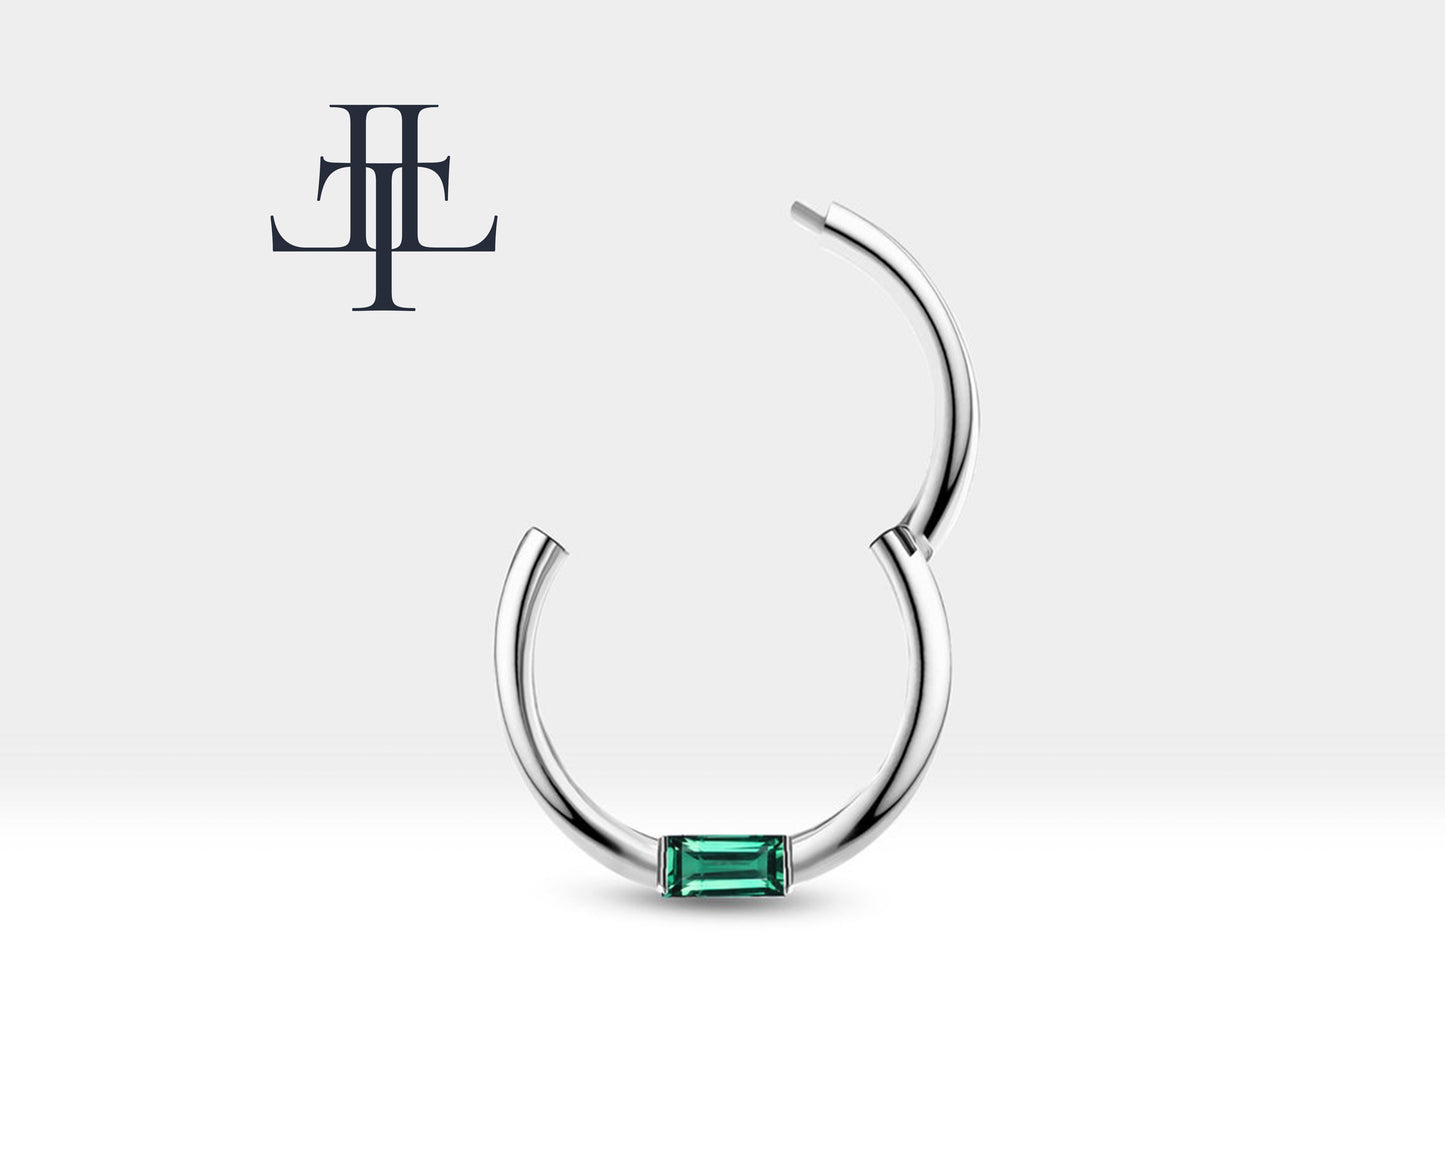 Cartilage Hoop Baguette Cut Emerald Clicker Piercing Single Daith Earring 14K Gold